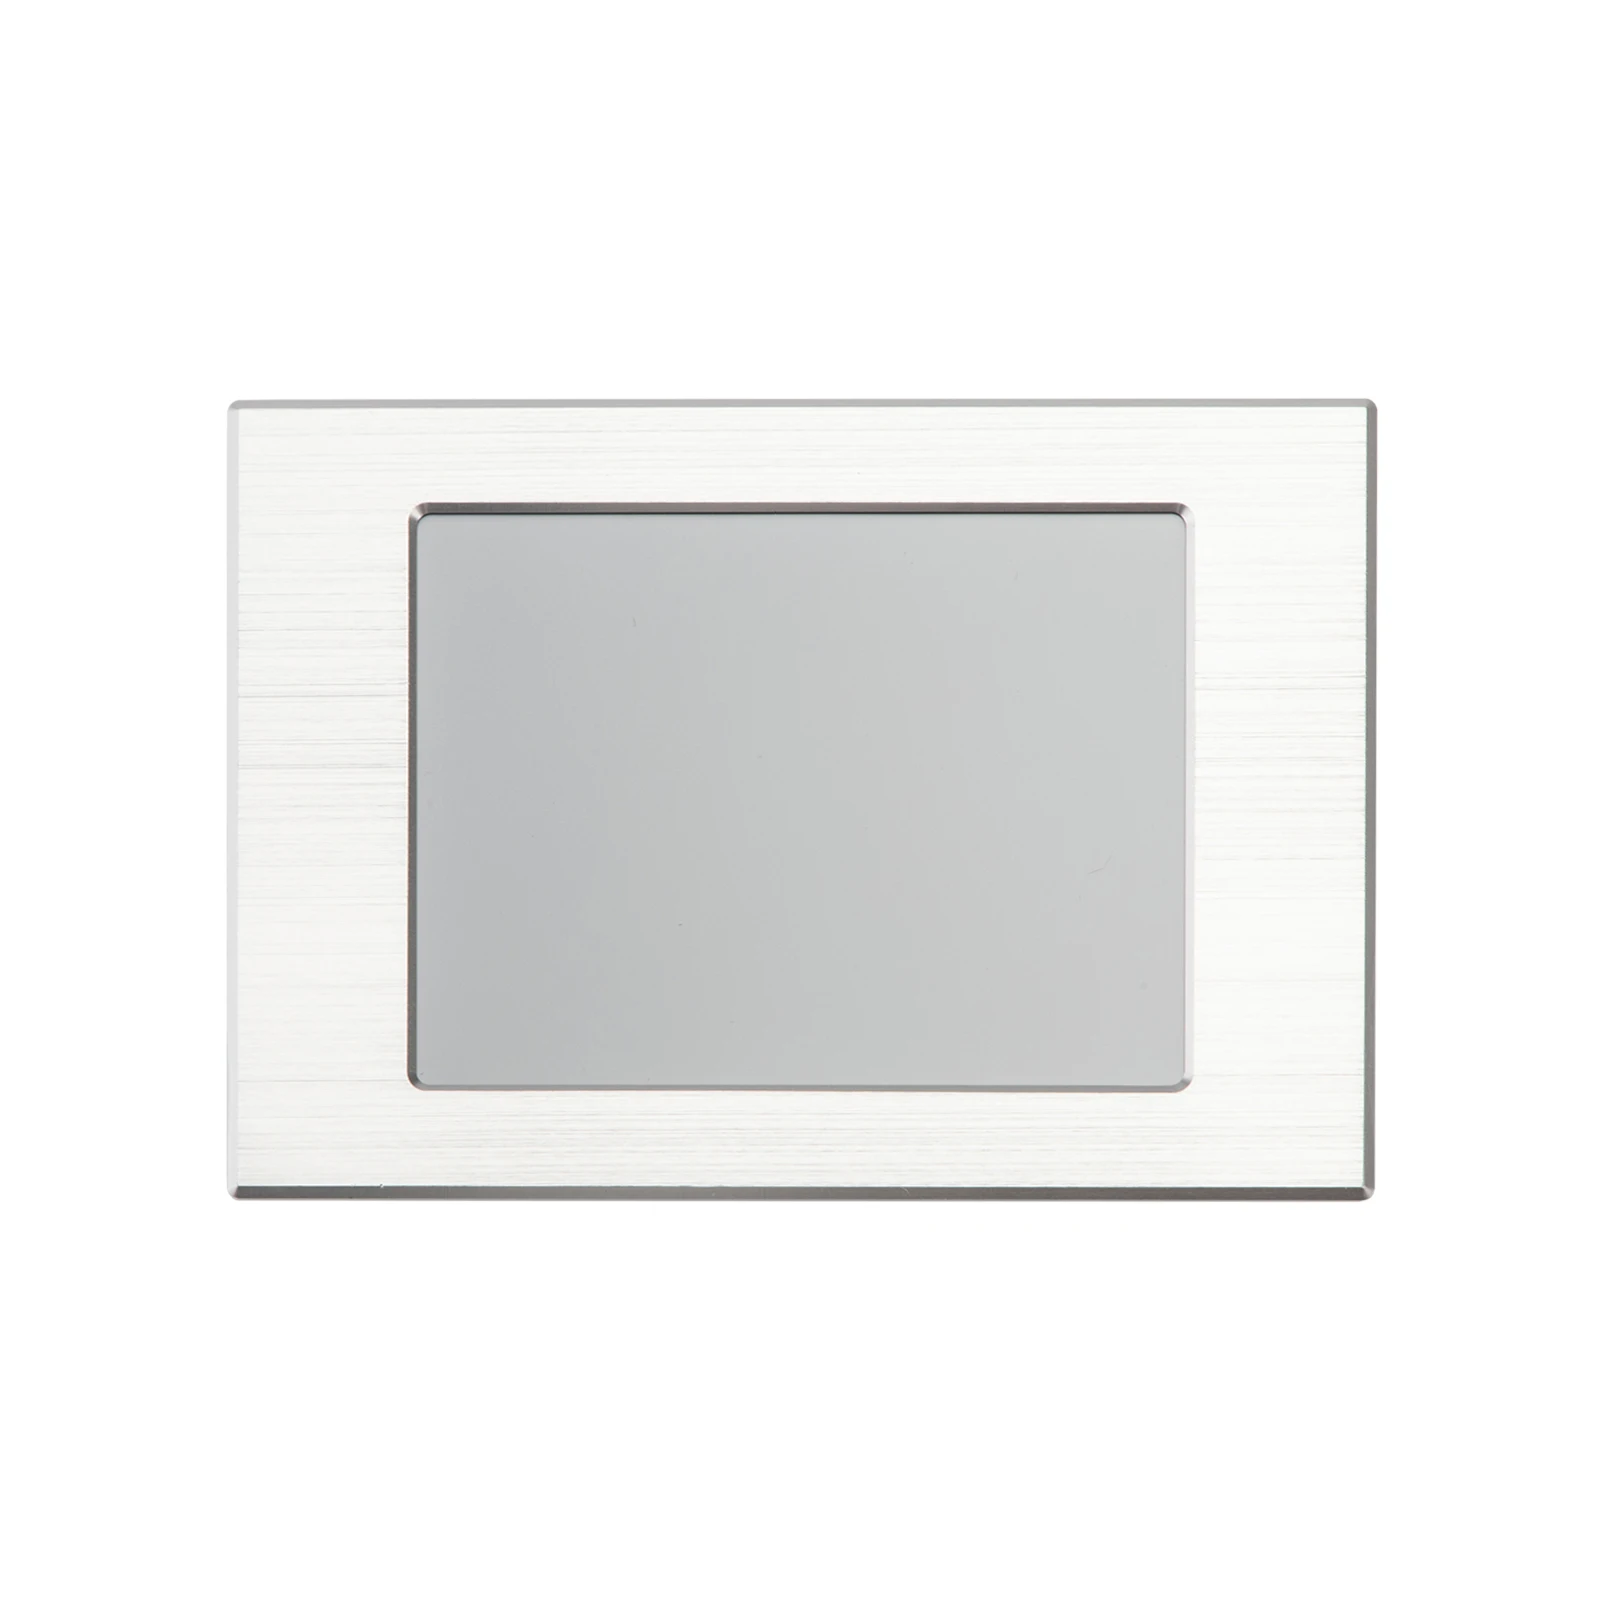 5.6 inch Metal Frame for STONE HMI Smart LCD Display Module STWI056WT-01